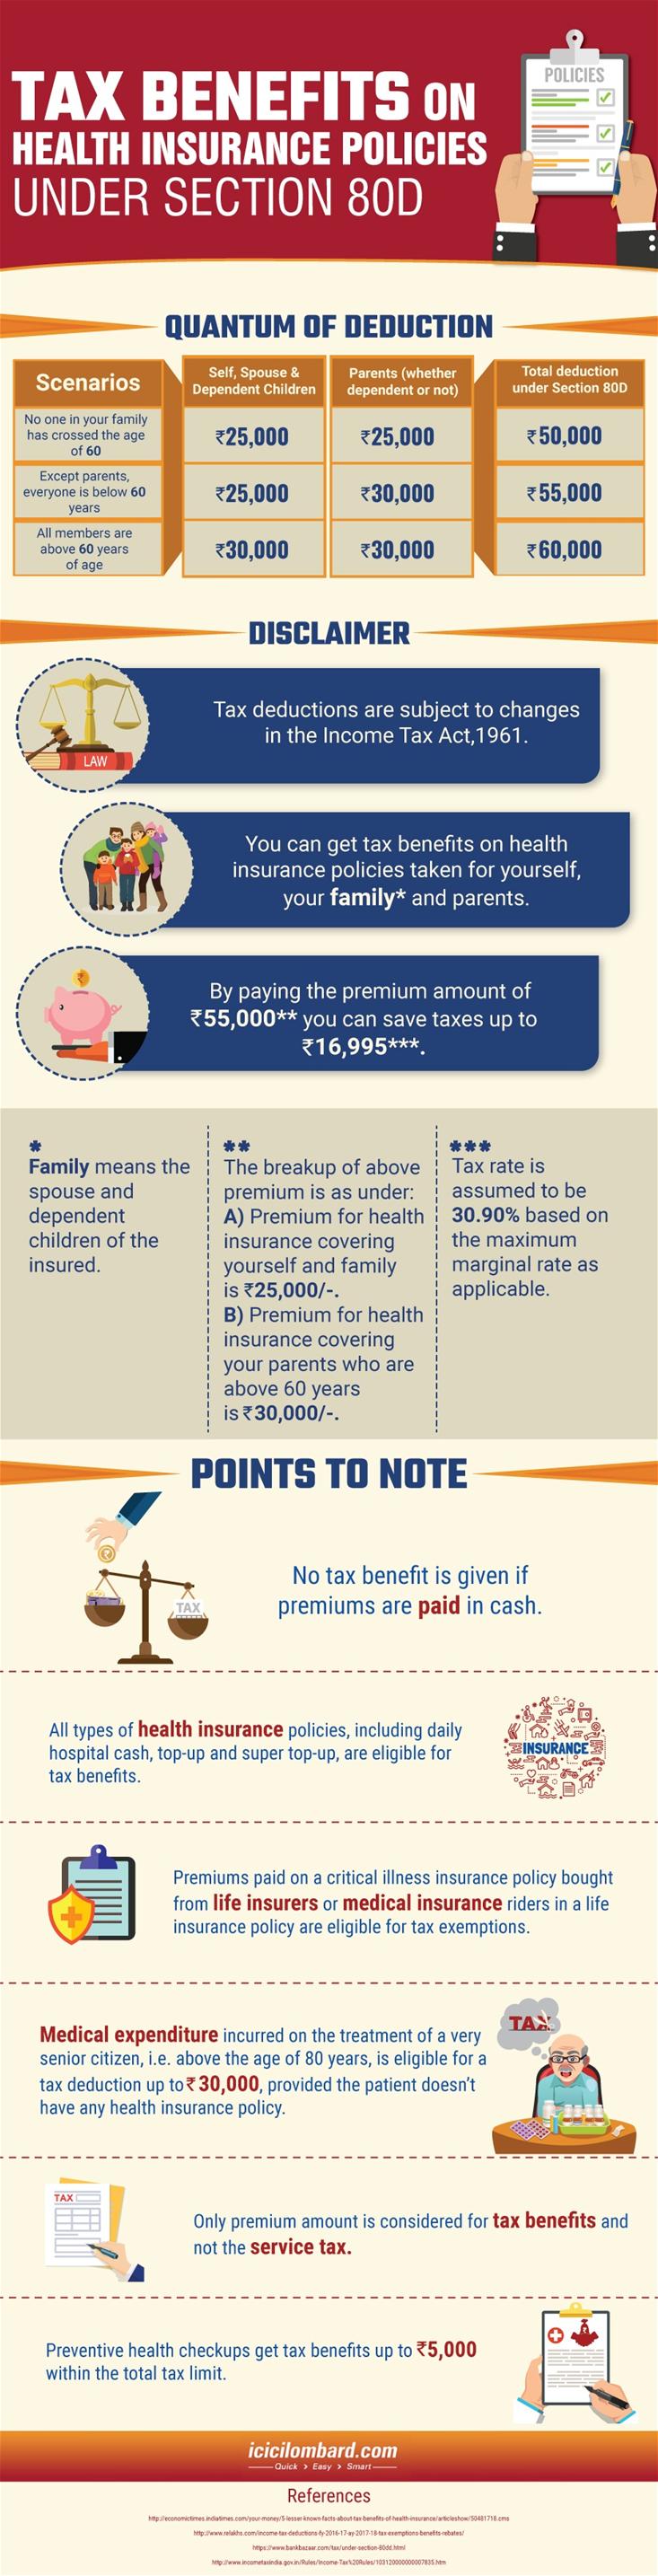 Tax Benefits under section 80D